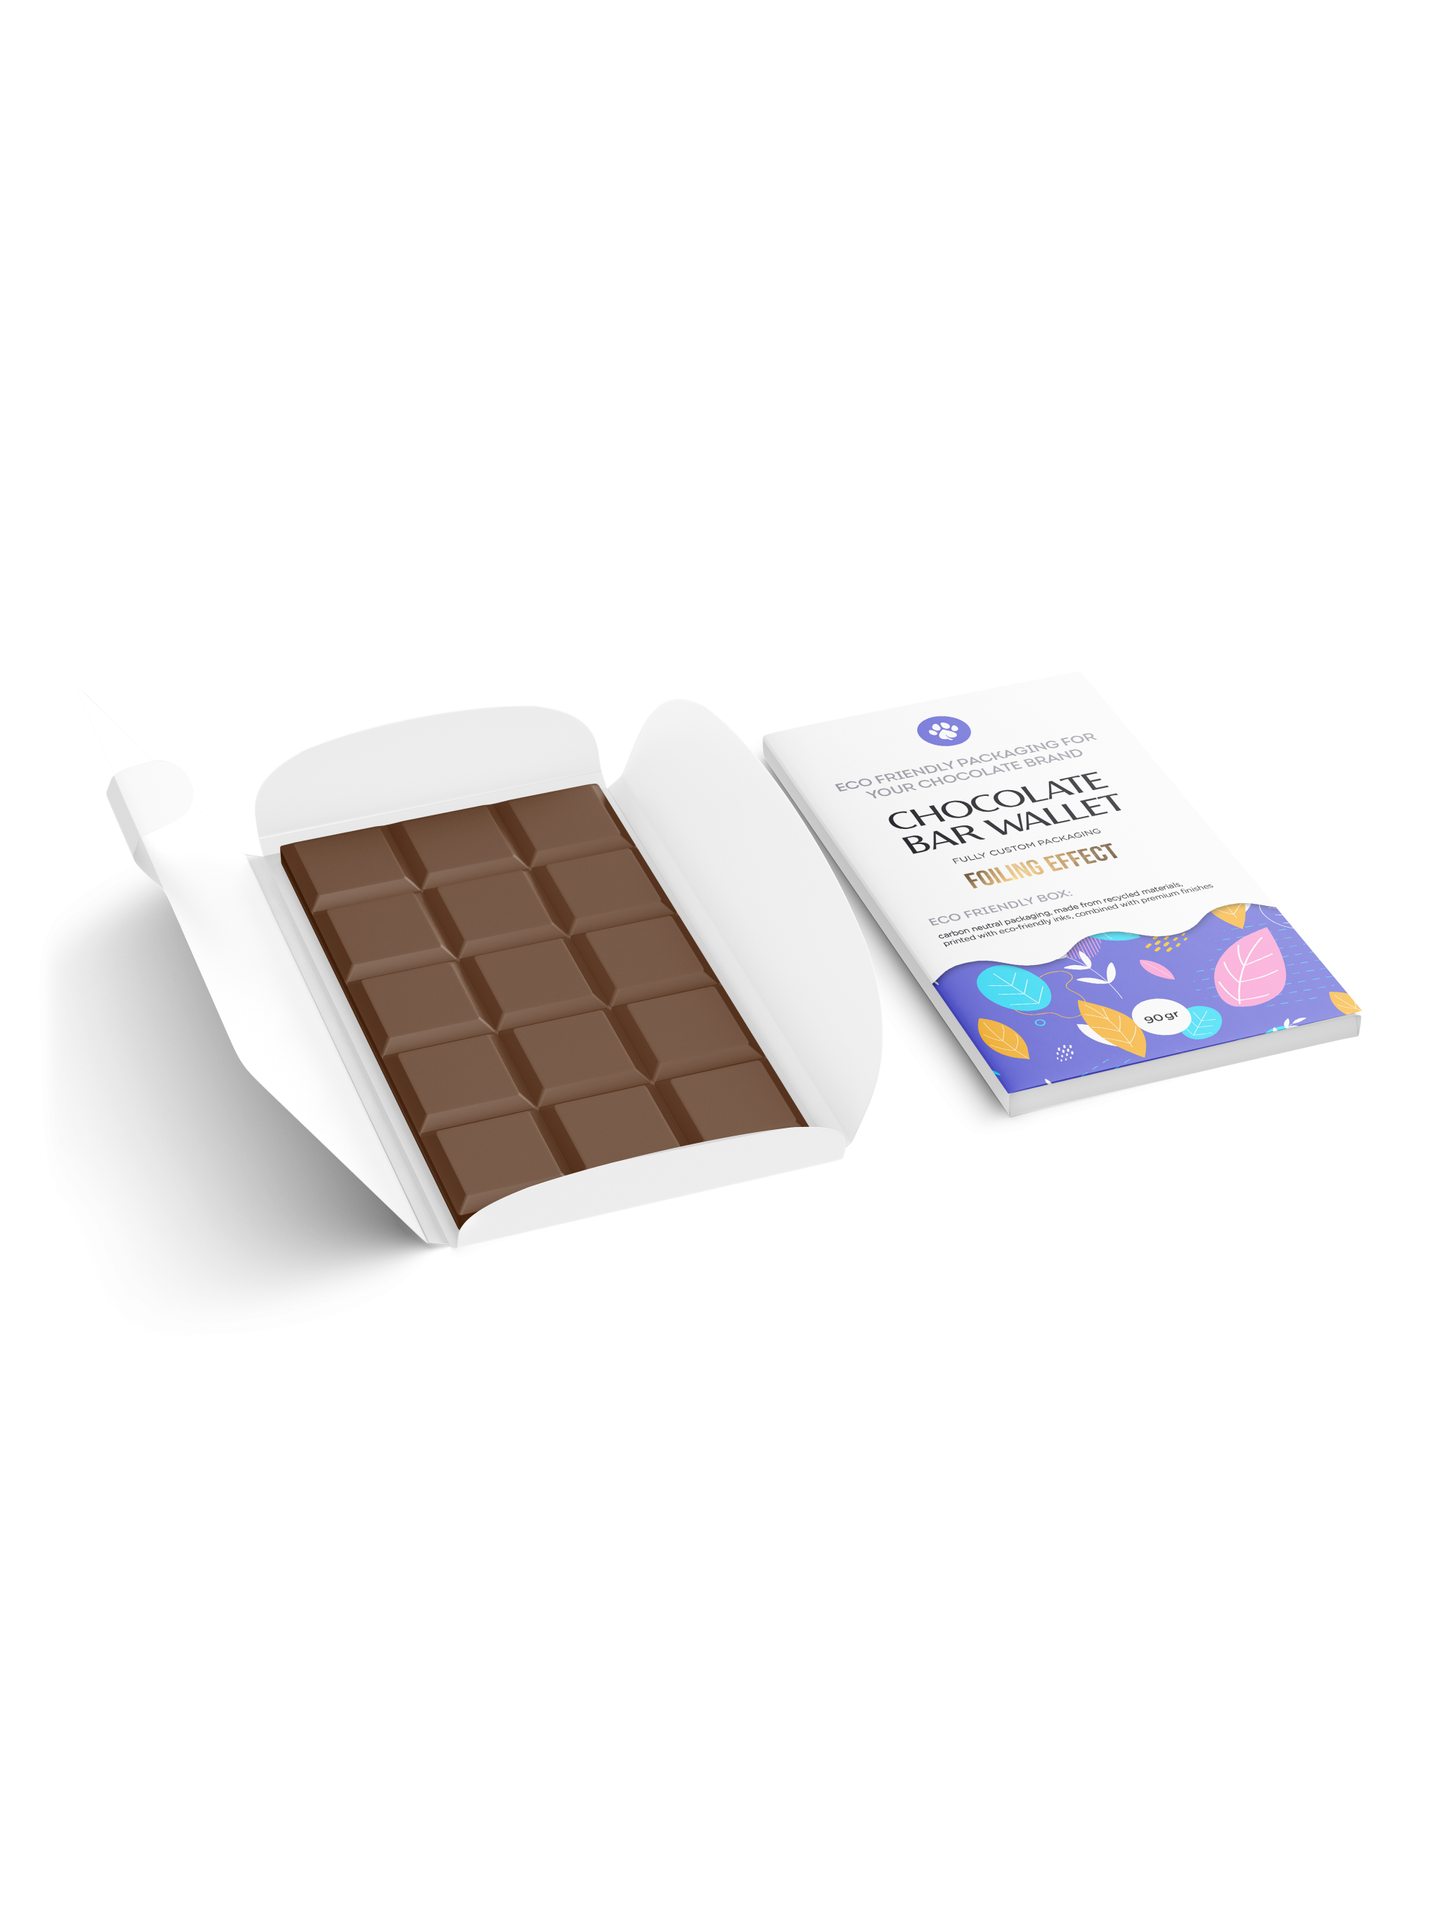 Custom Chocolate Bar Boxes, Chocolate Bar Packaging